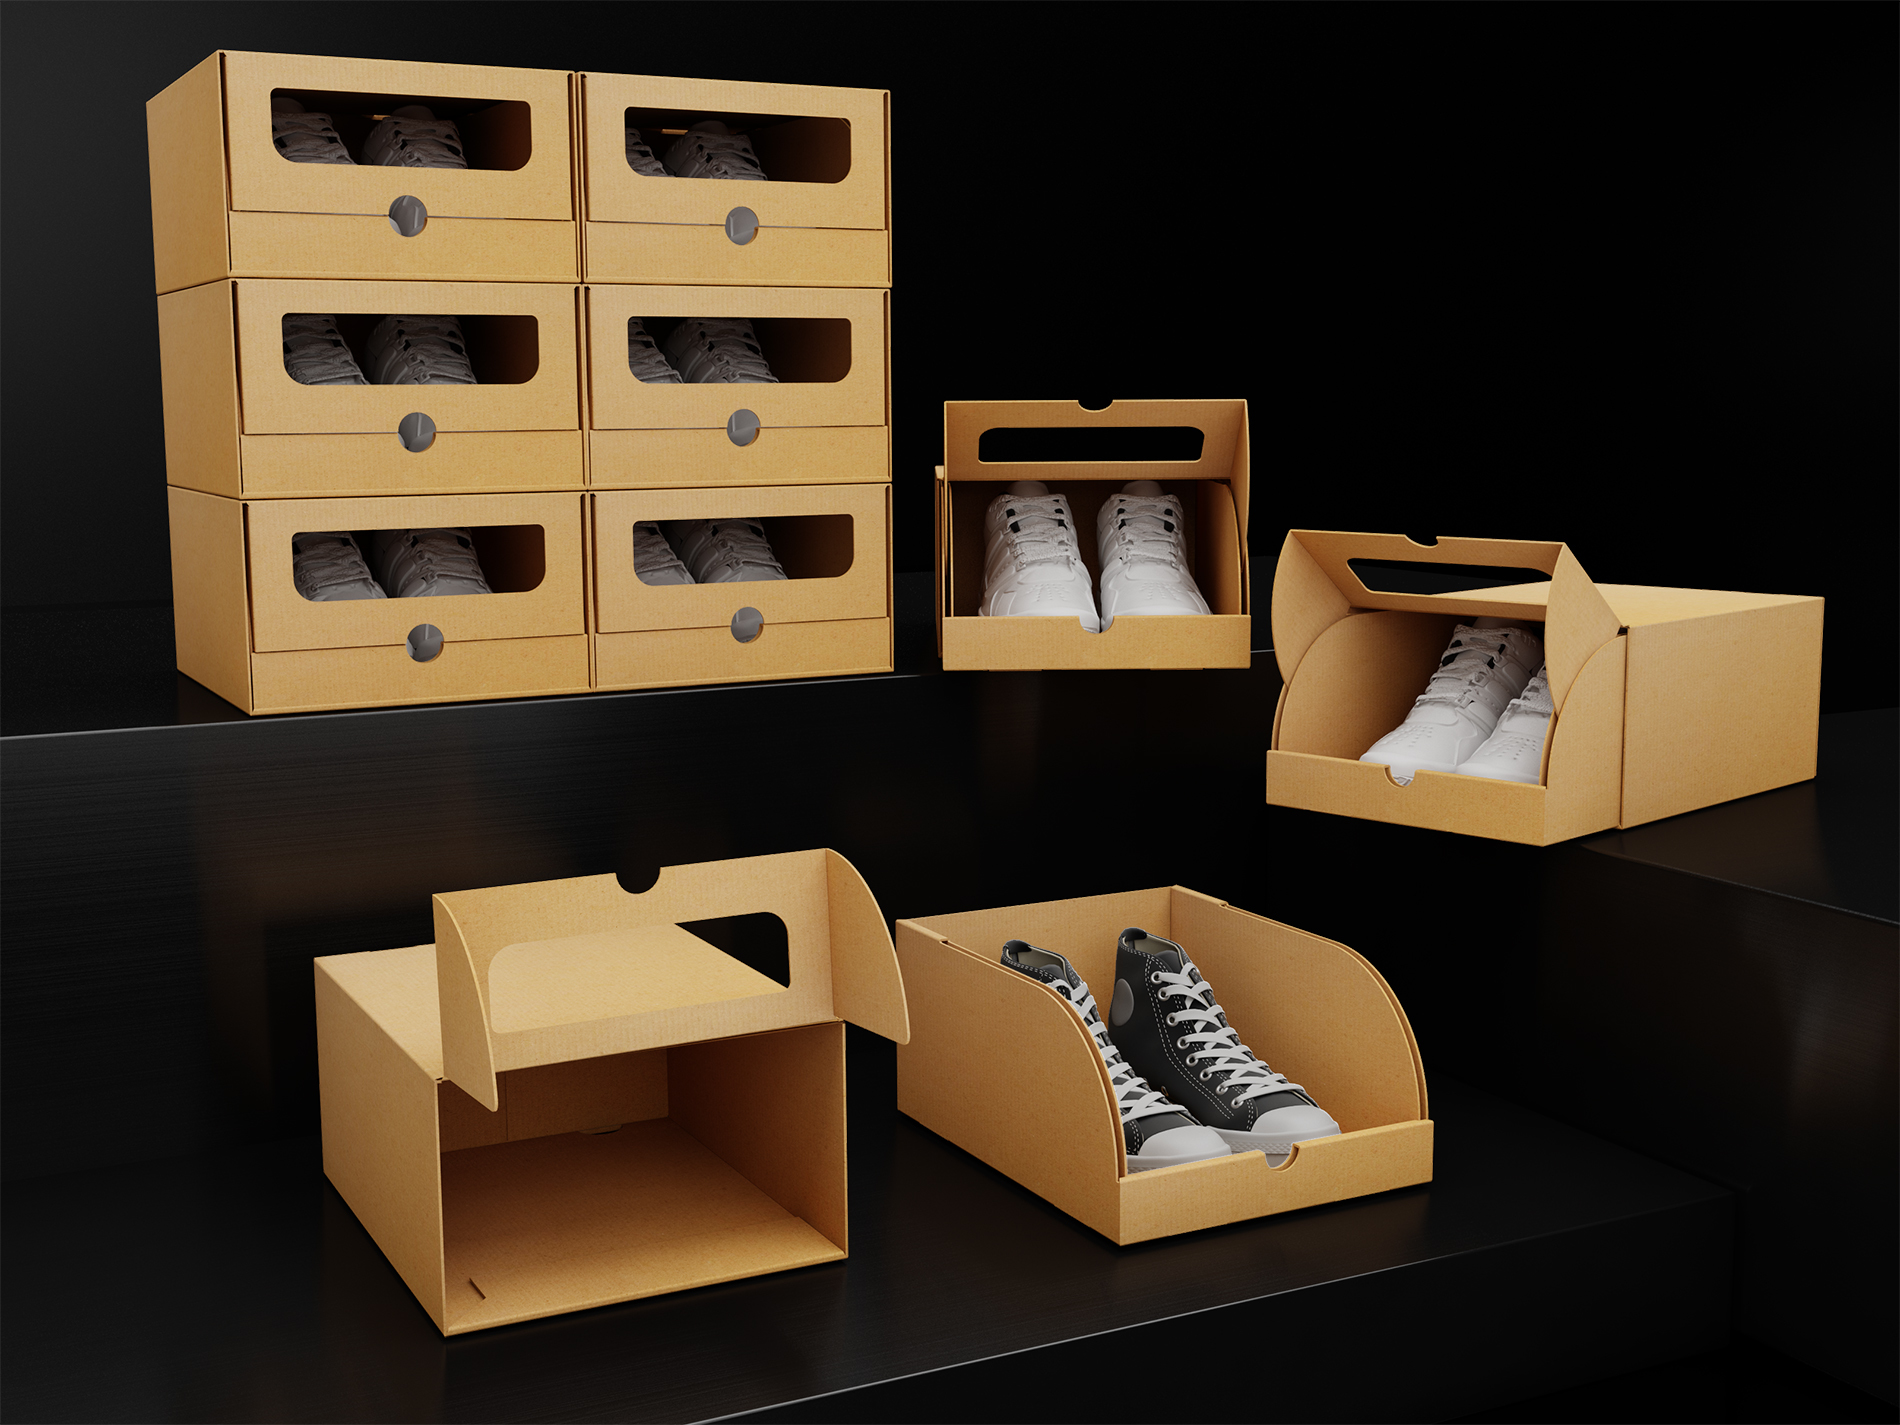 iF Design - Shoe box design with creative storage